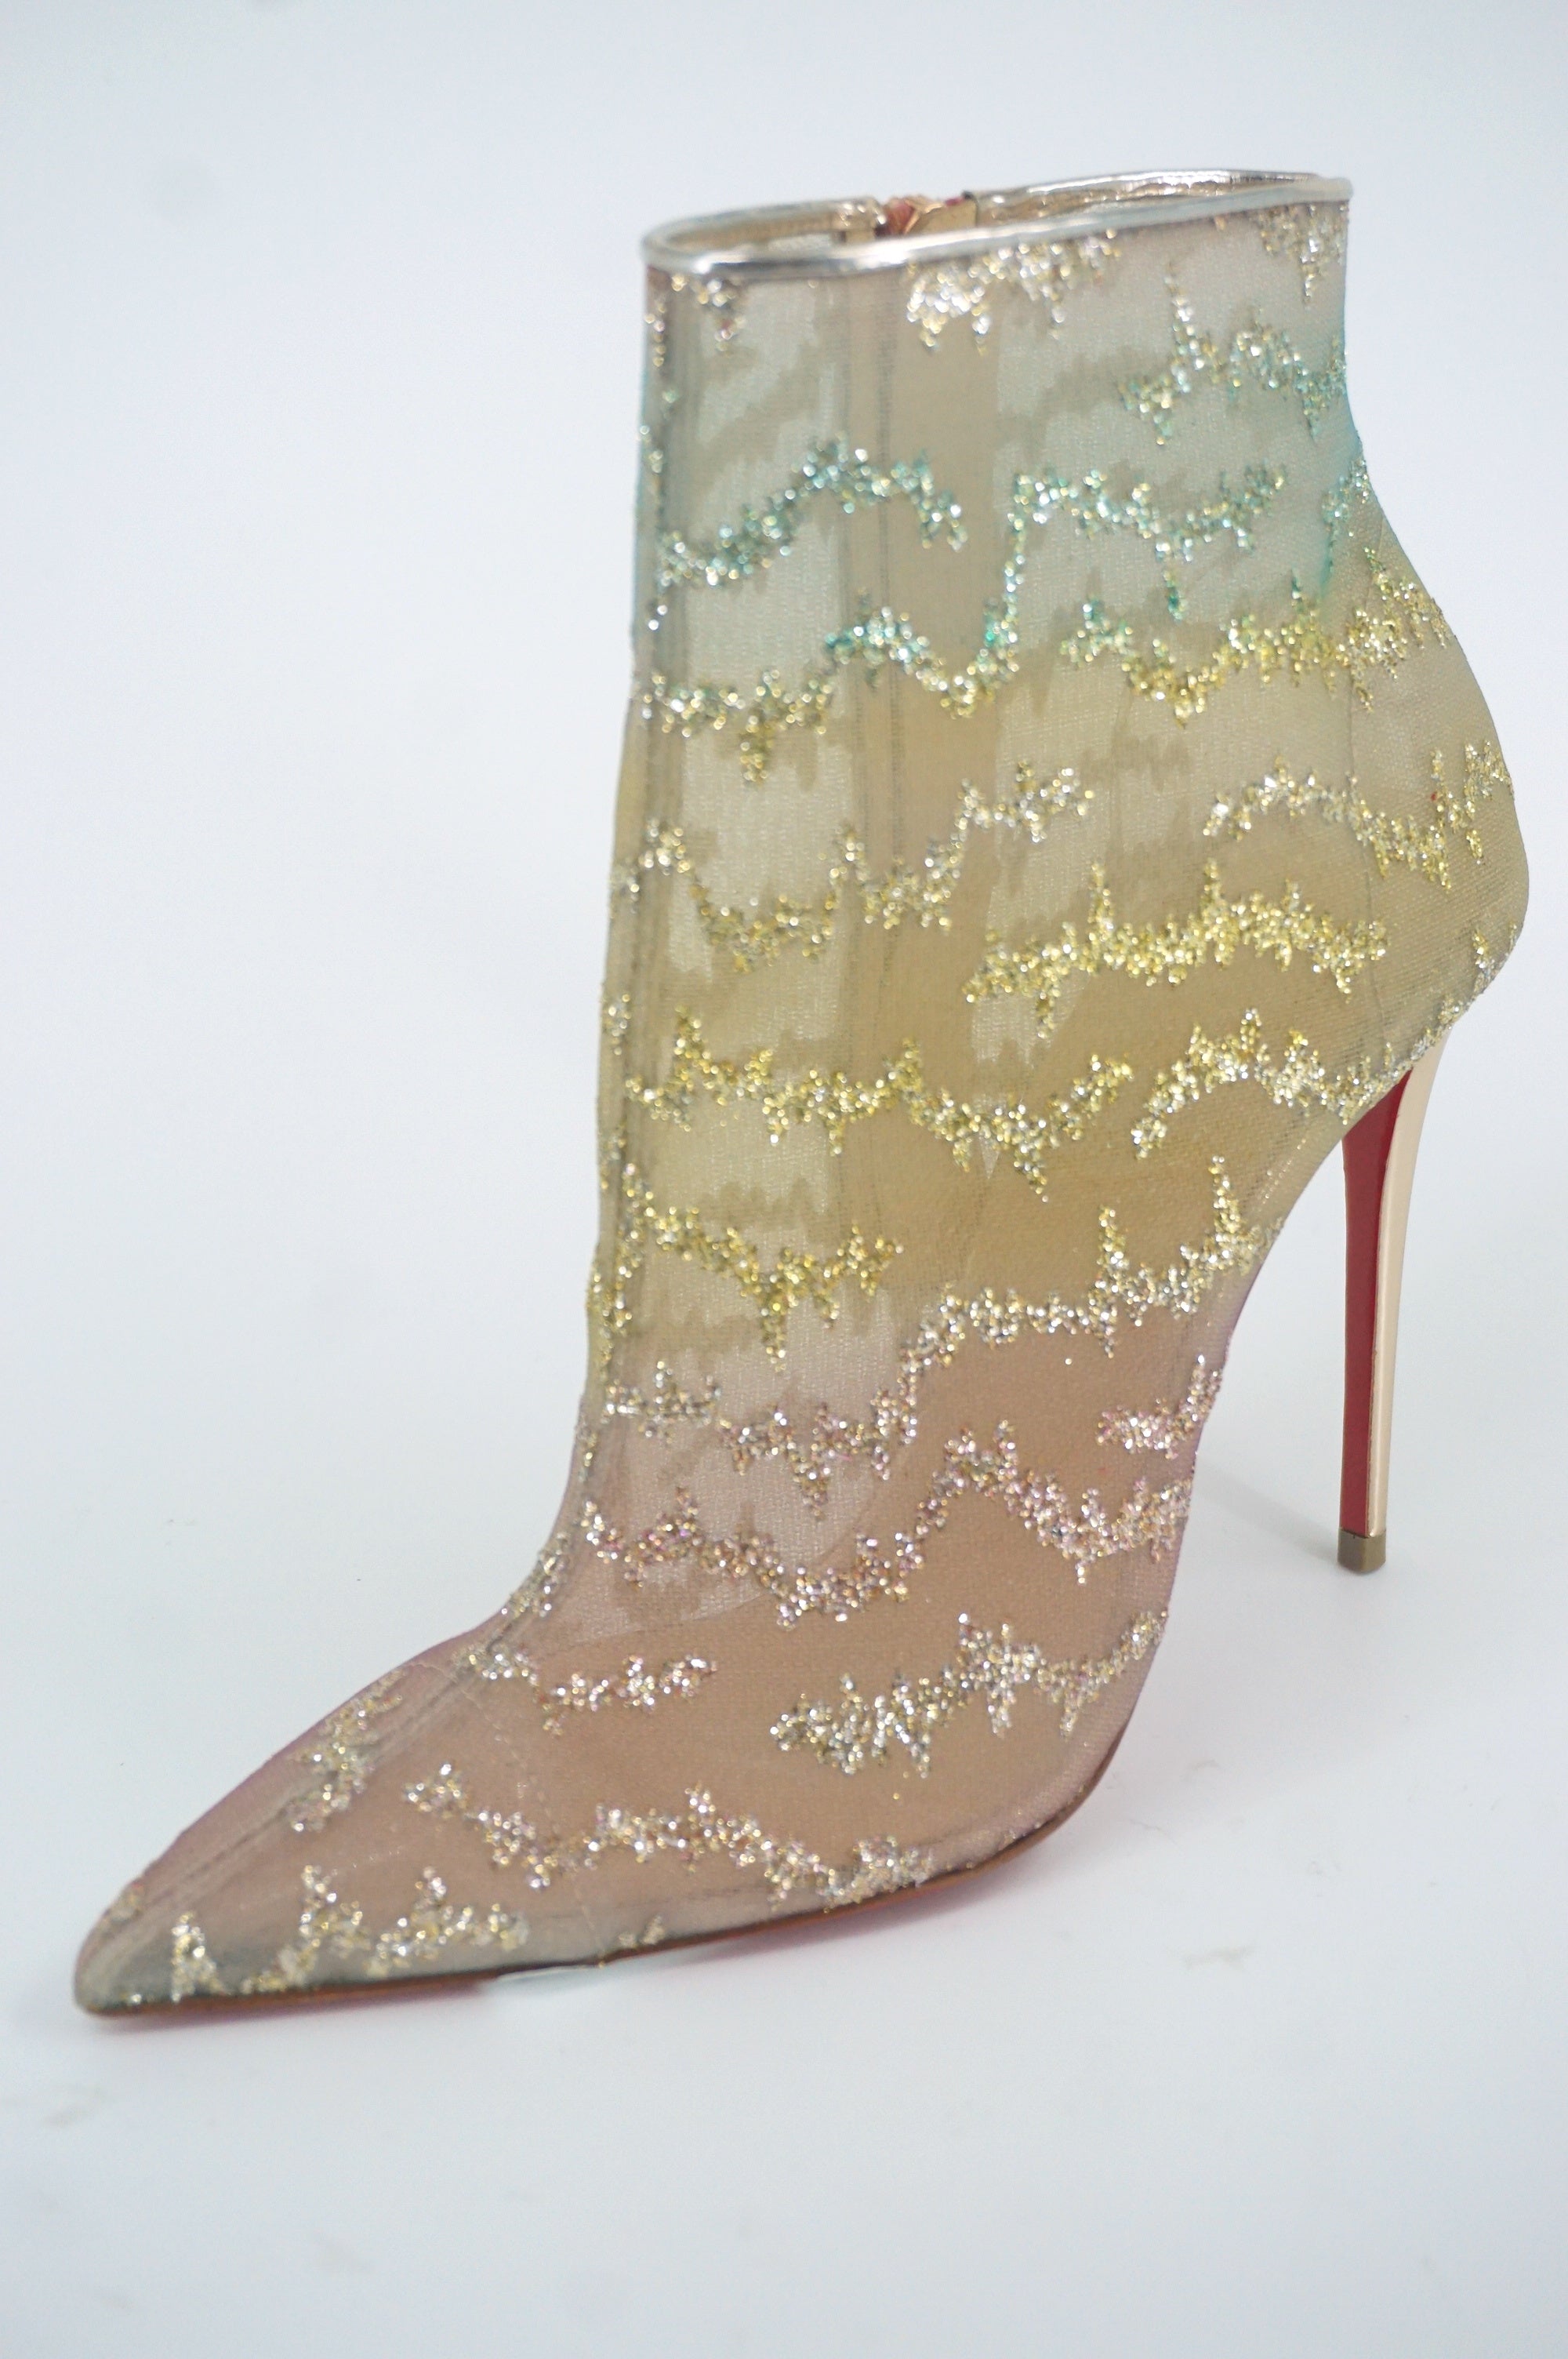 Christian Louboutin Nancy Booties Glitter Mesh Ankle Size 37.5 New $1095 Degrade